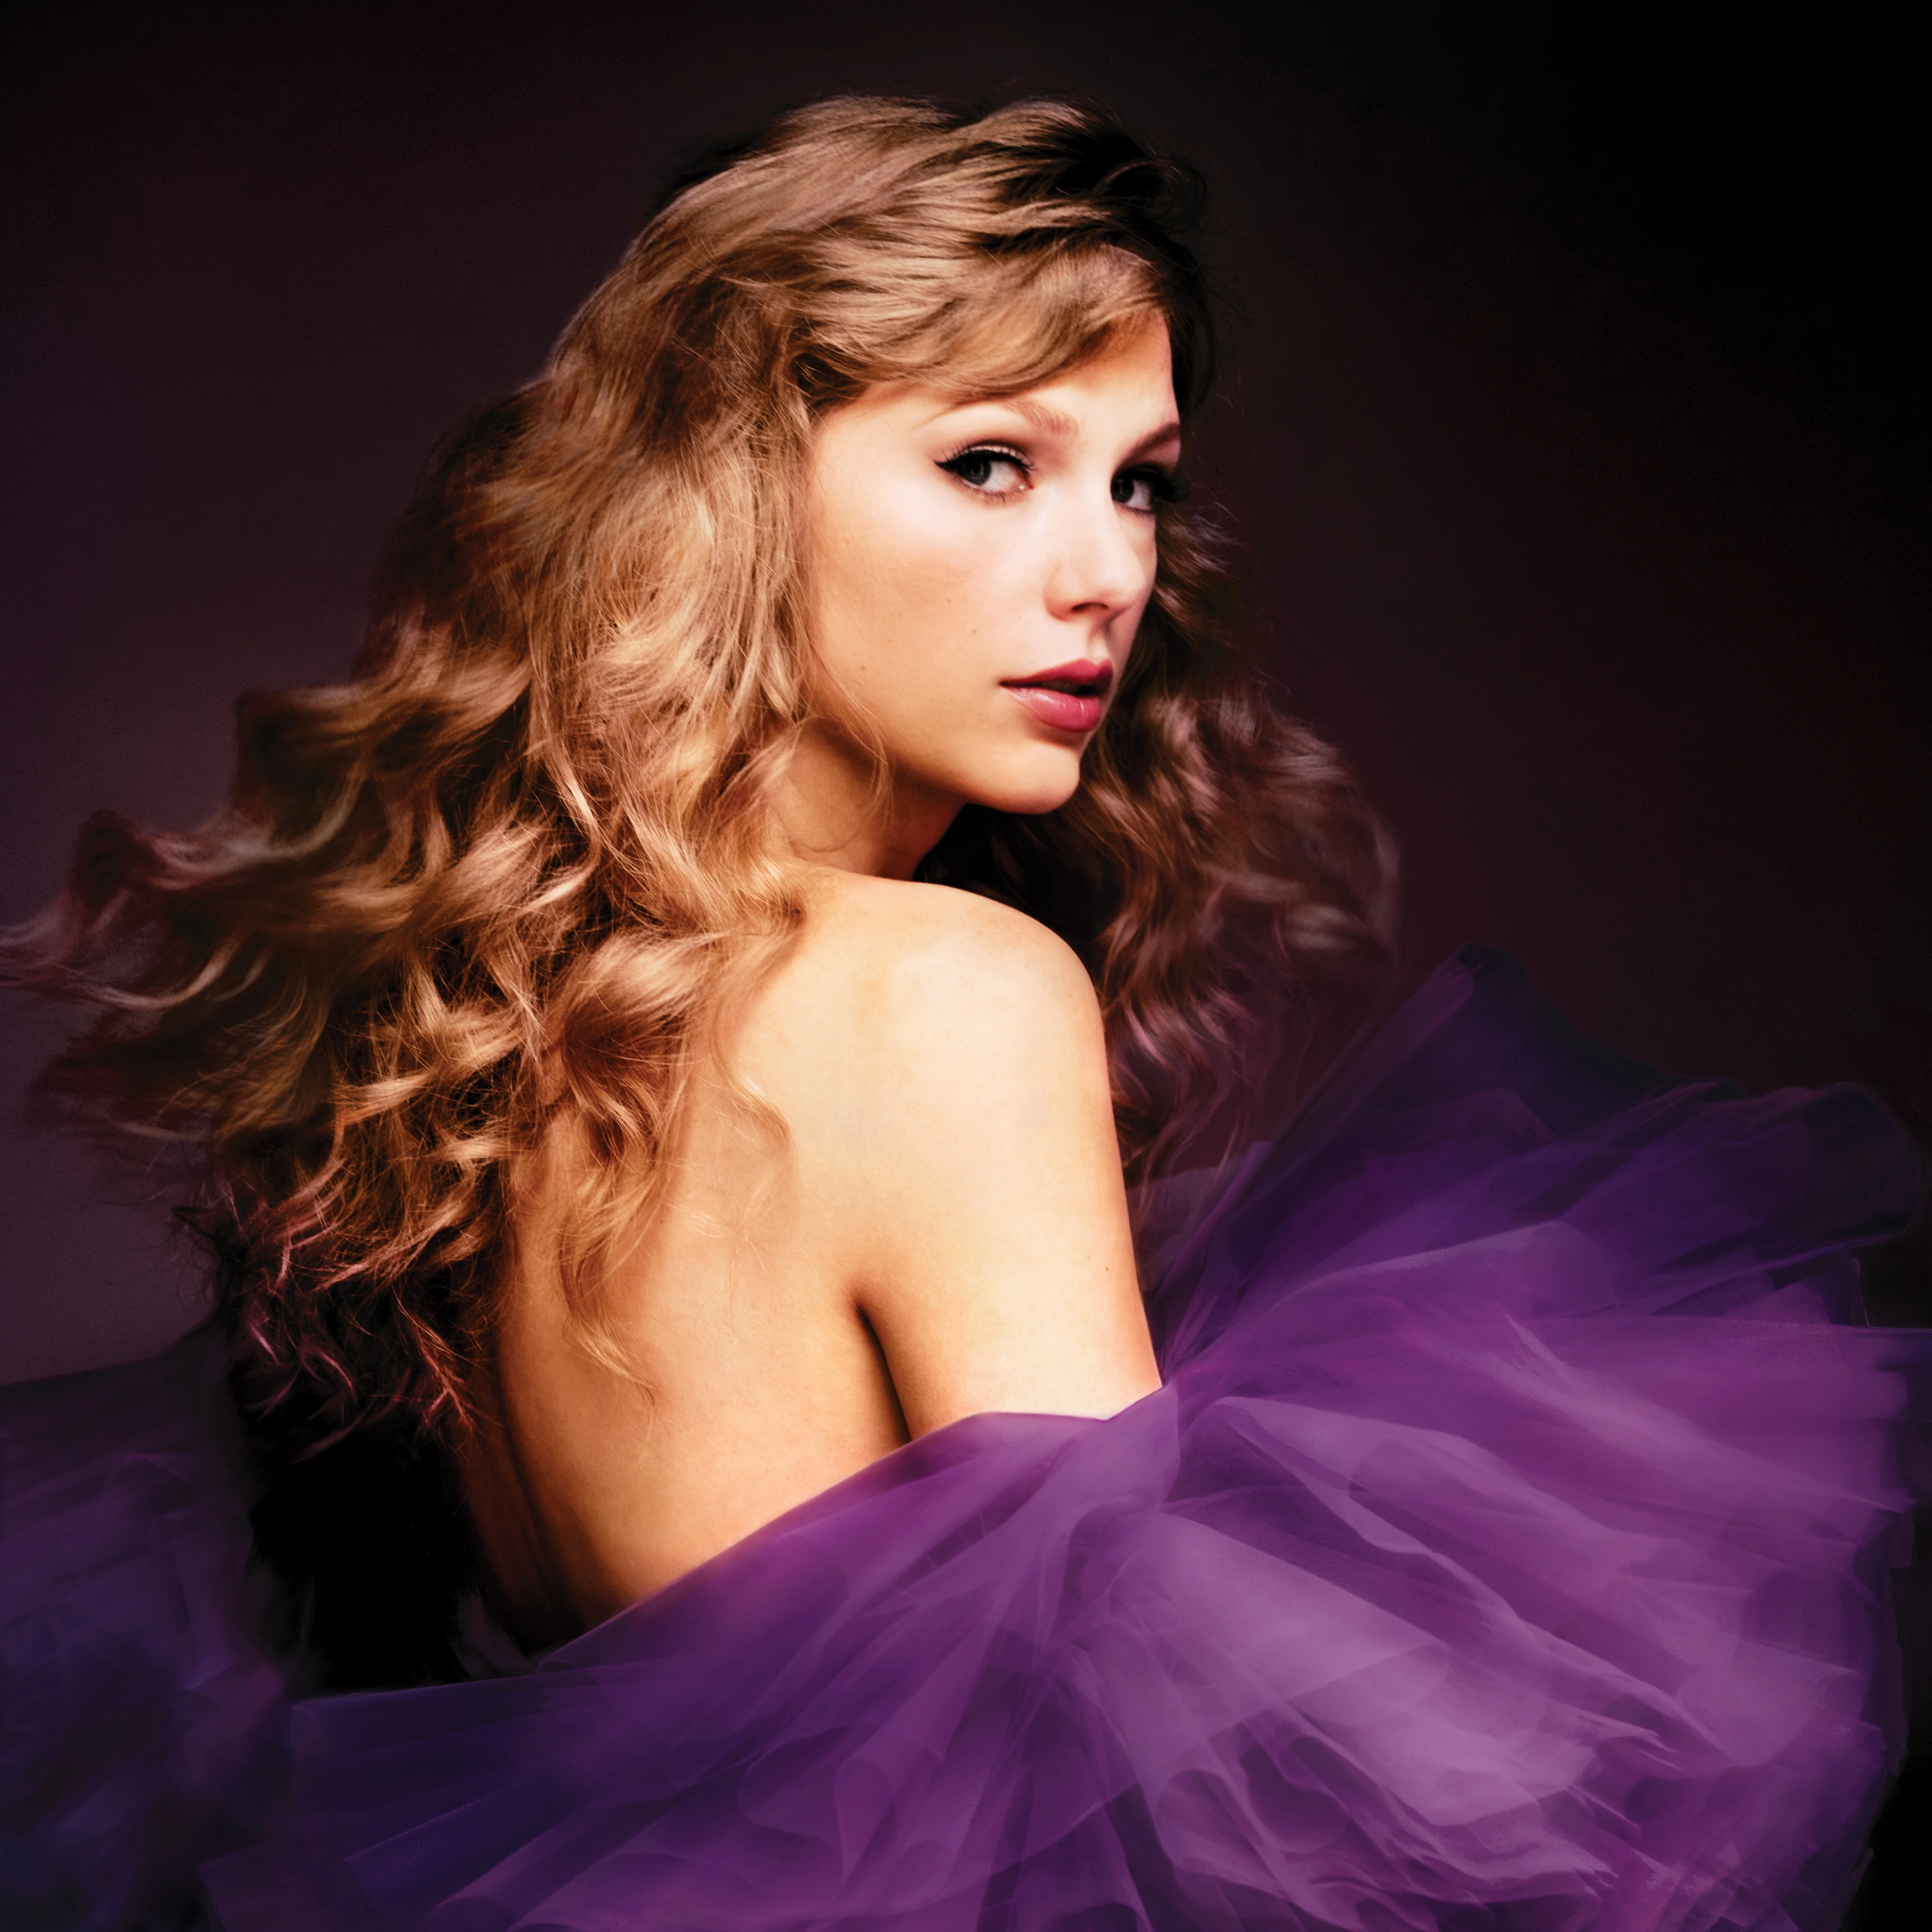 Speak Now (Taylor's Version) Album Cover